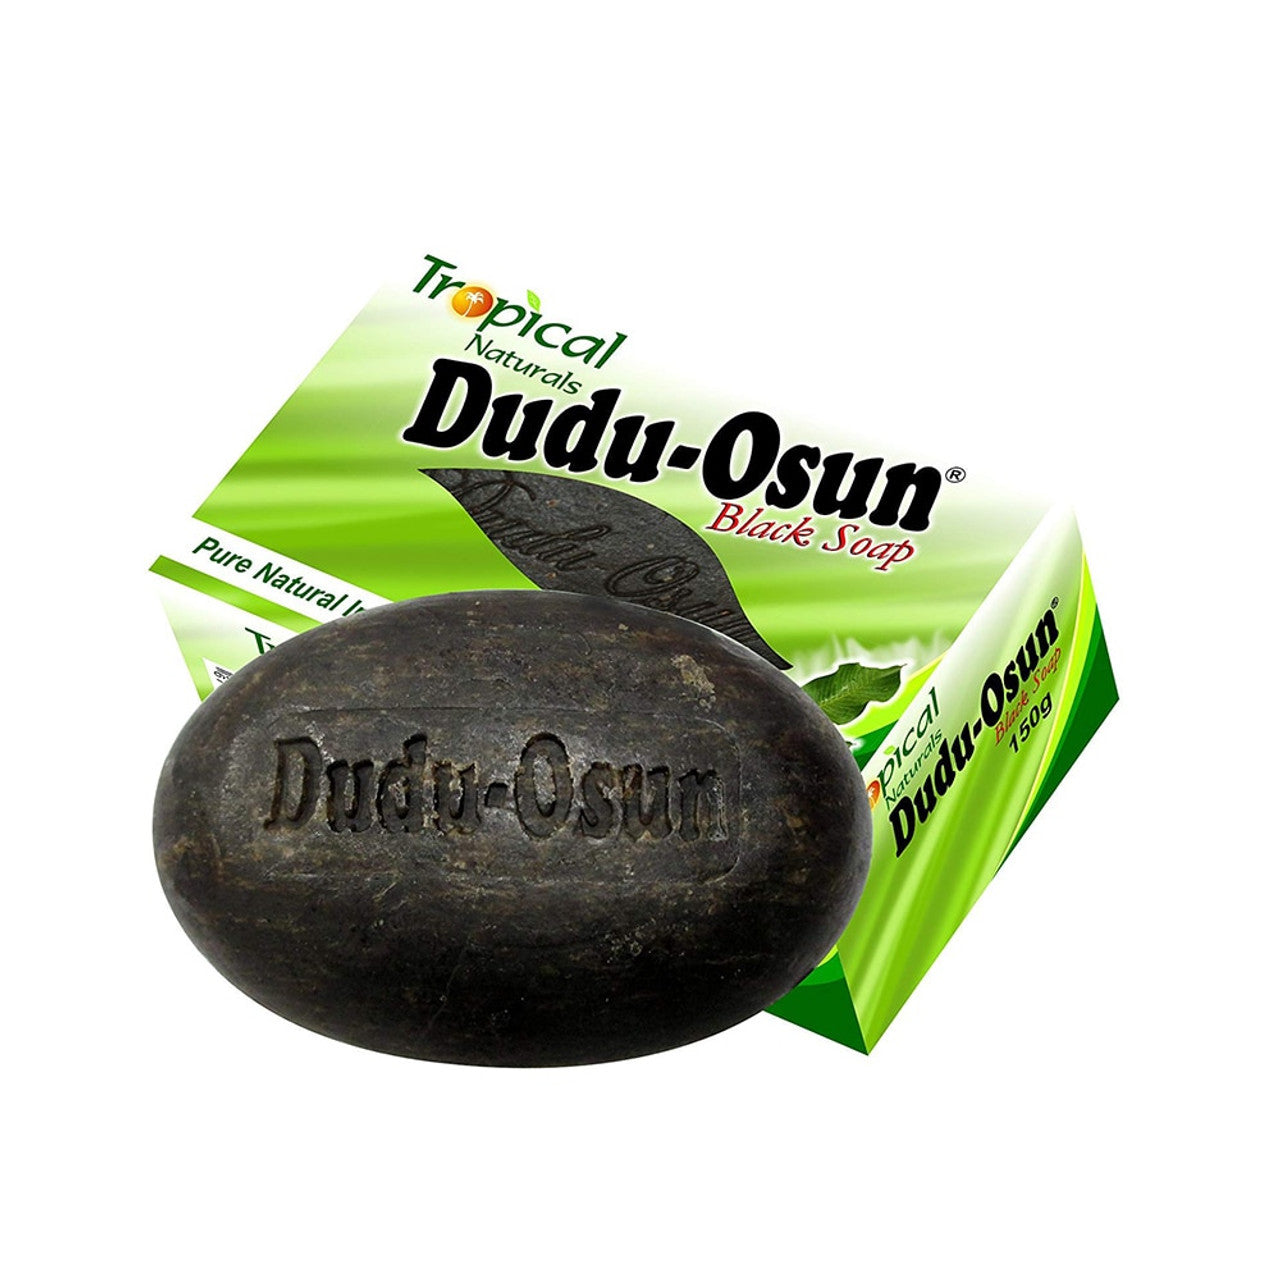 Dudu osun black soap